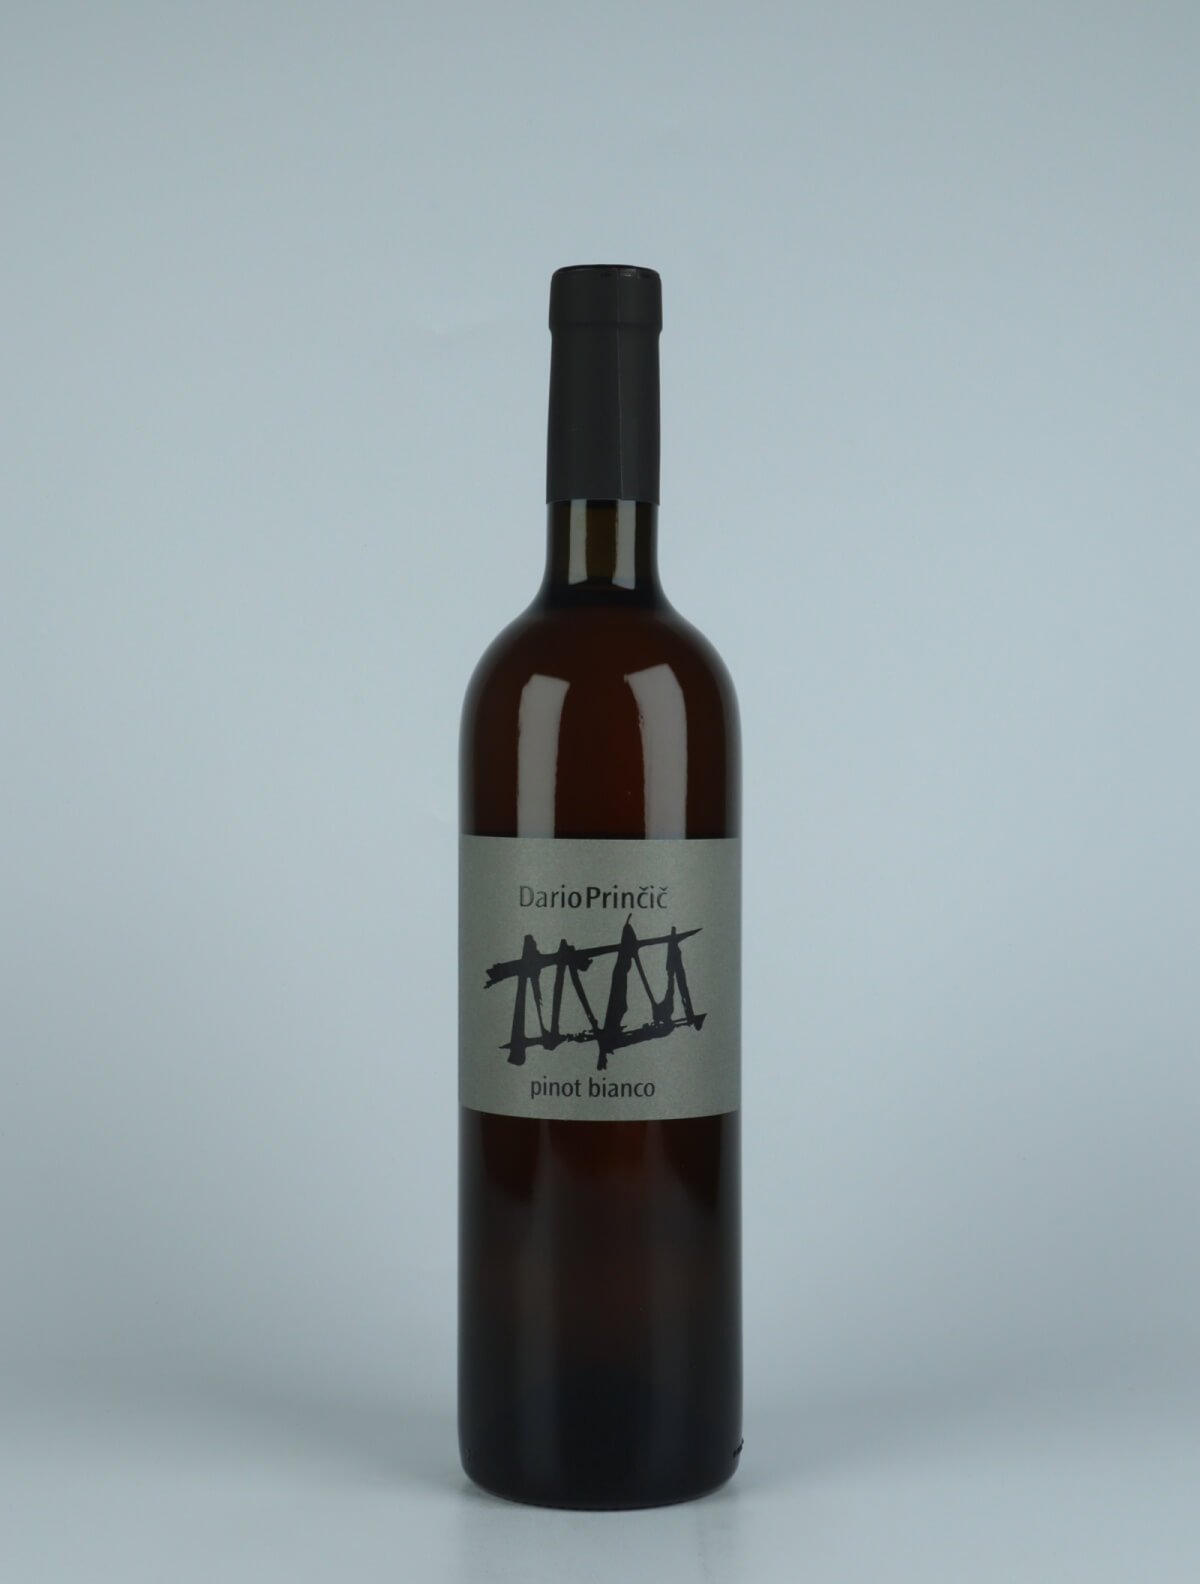 En flaske 2019 Pinot Bianco Orange vin fra Dario Princic, Friuli i Italien